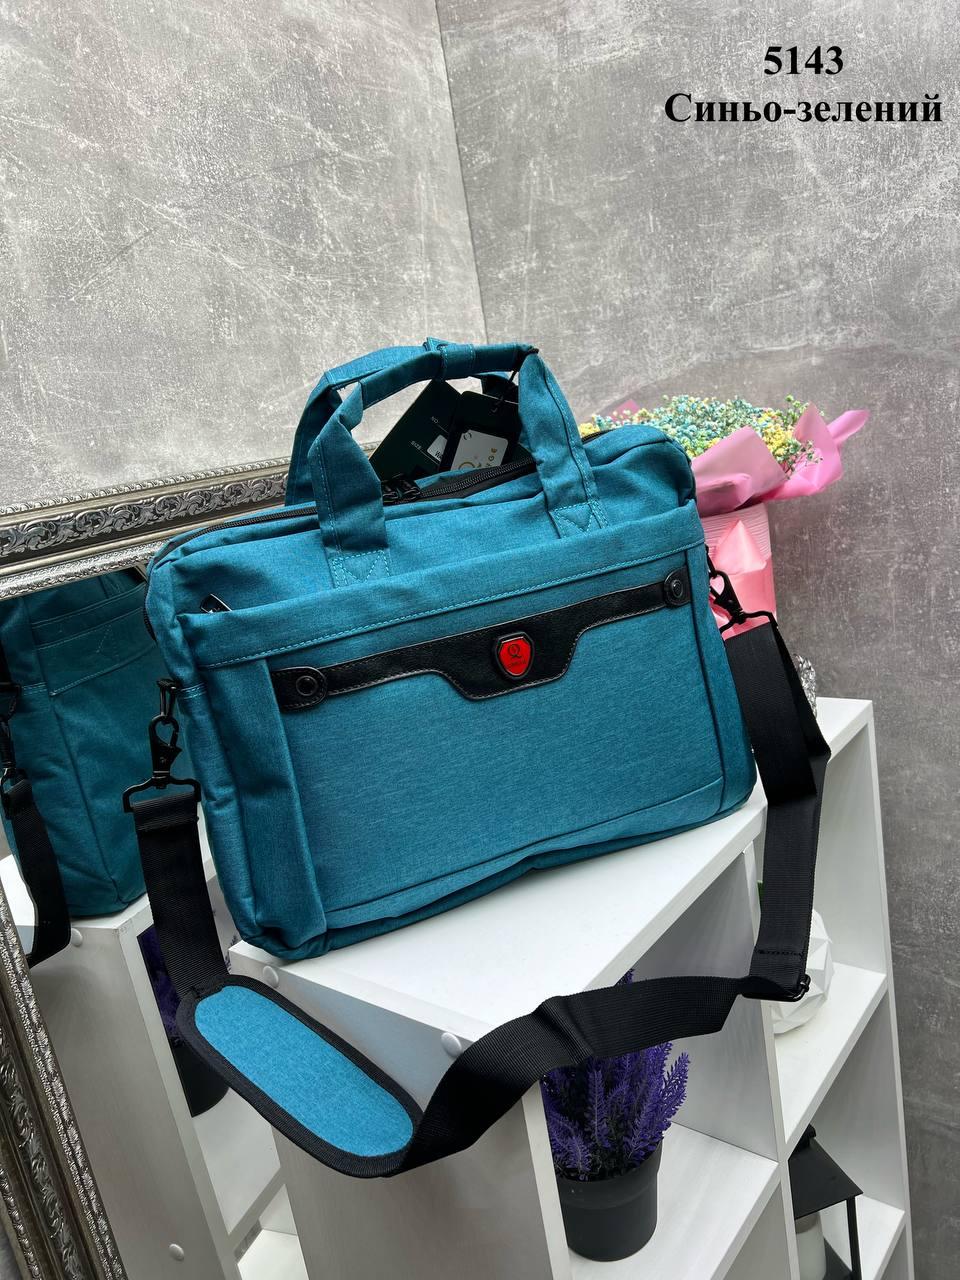 АКЦІЯ! Синьо-зелена - сумка для ноутбука з додатковими кишенями - велика, зручна та стильна - 40х30х10 см (5143), фото 1